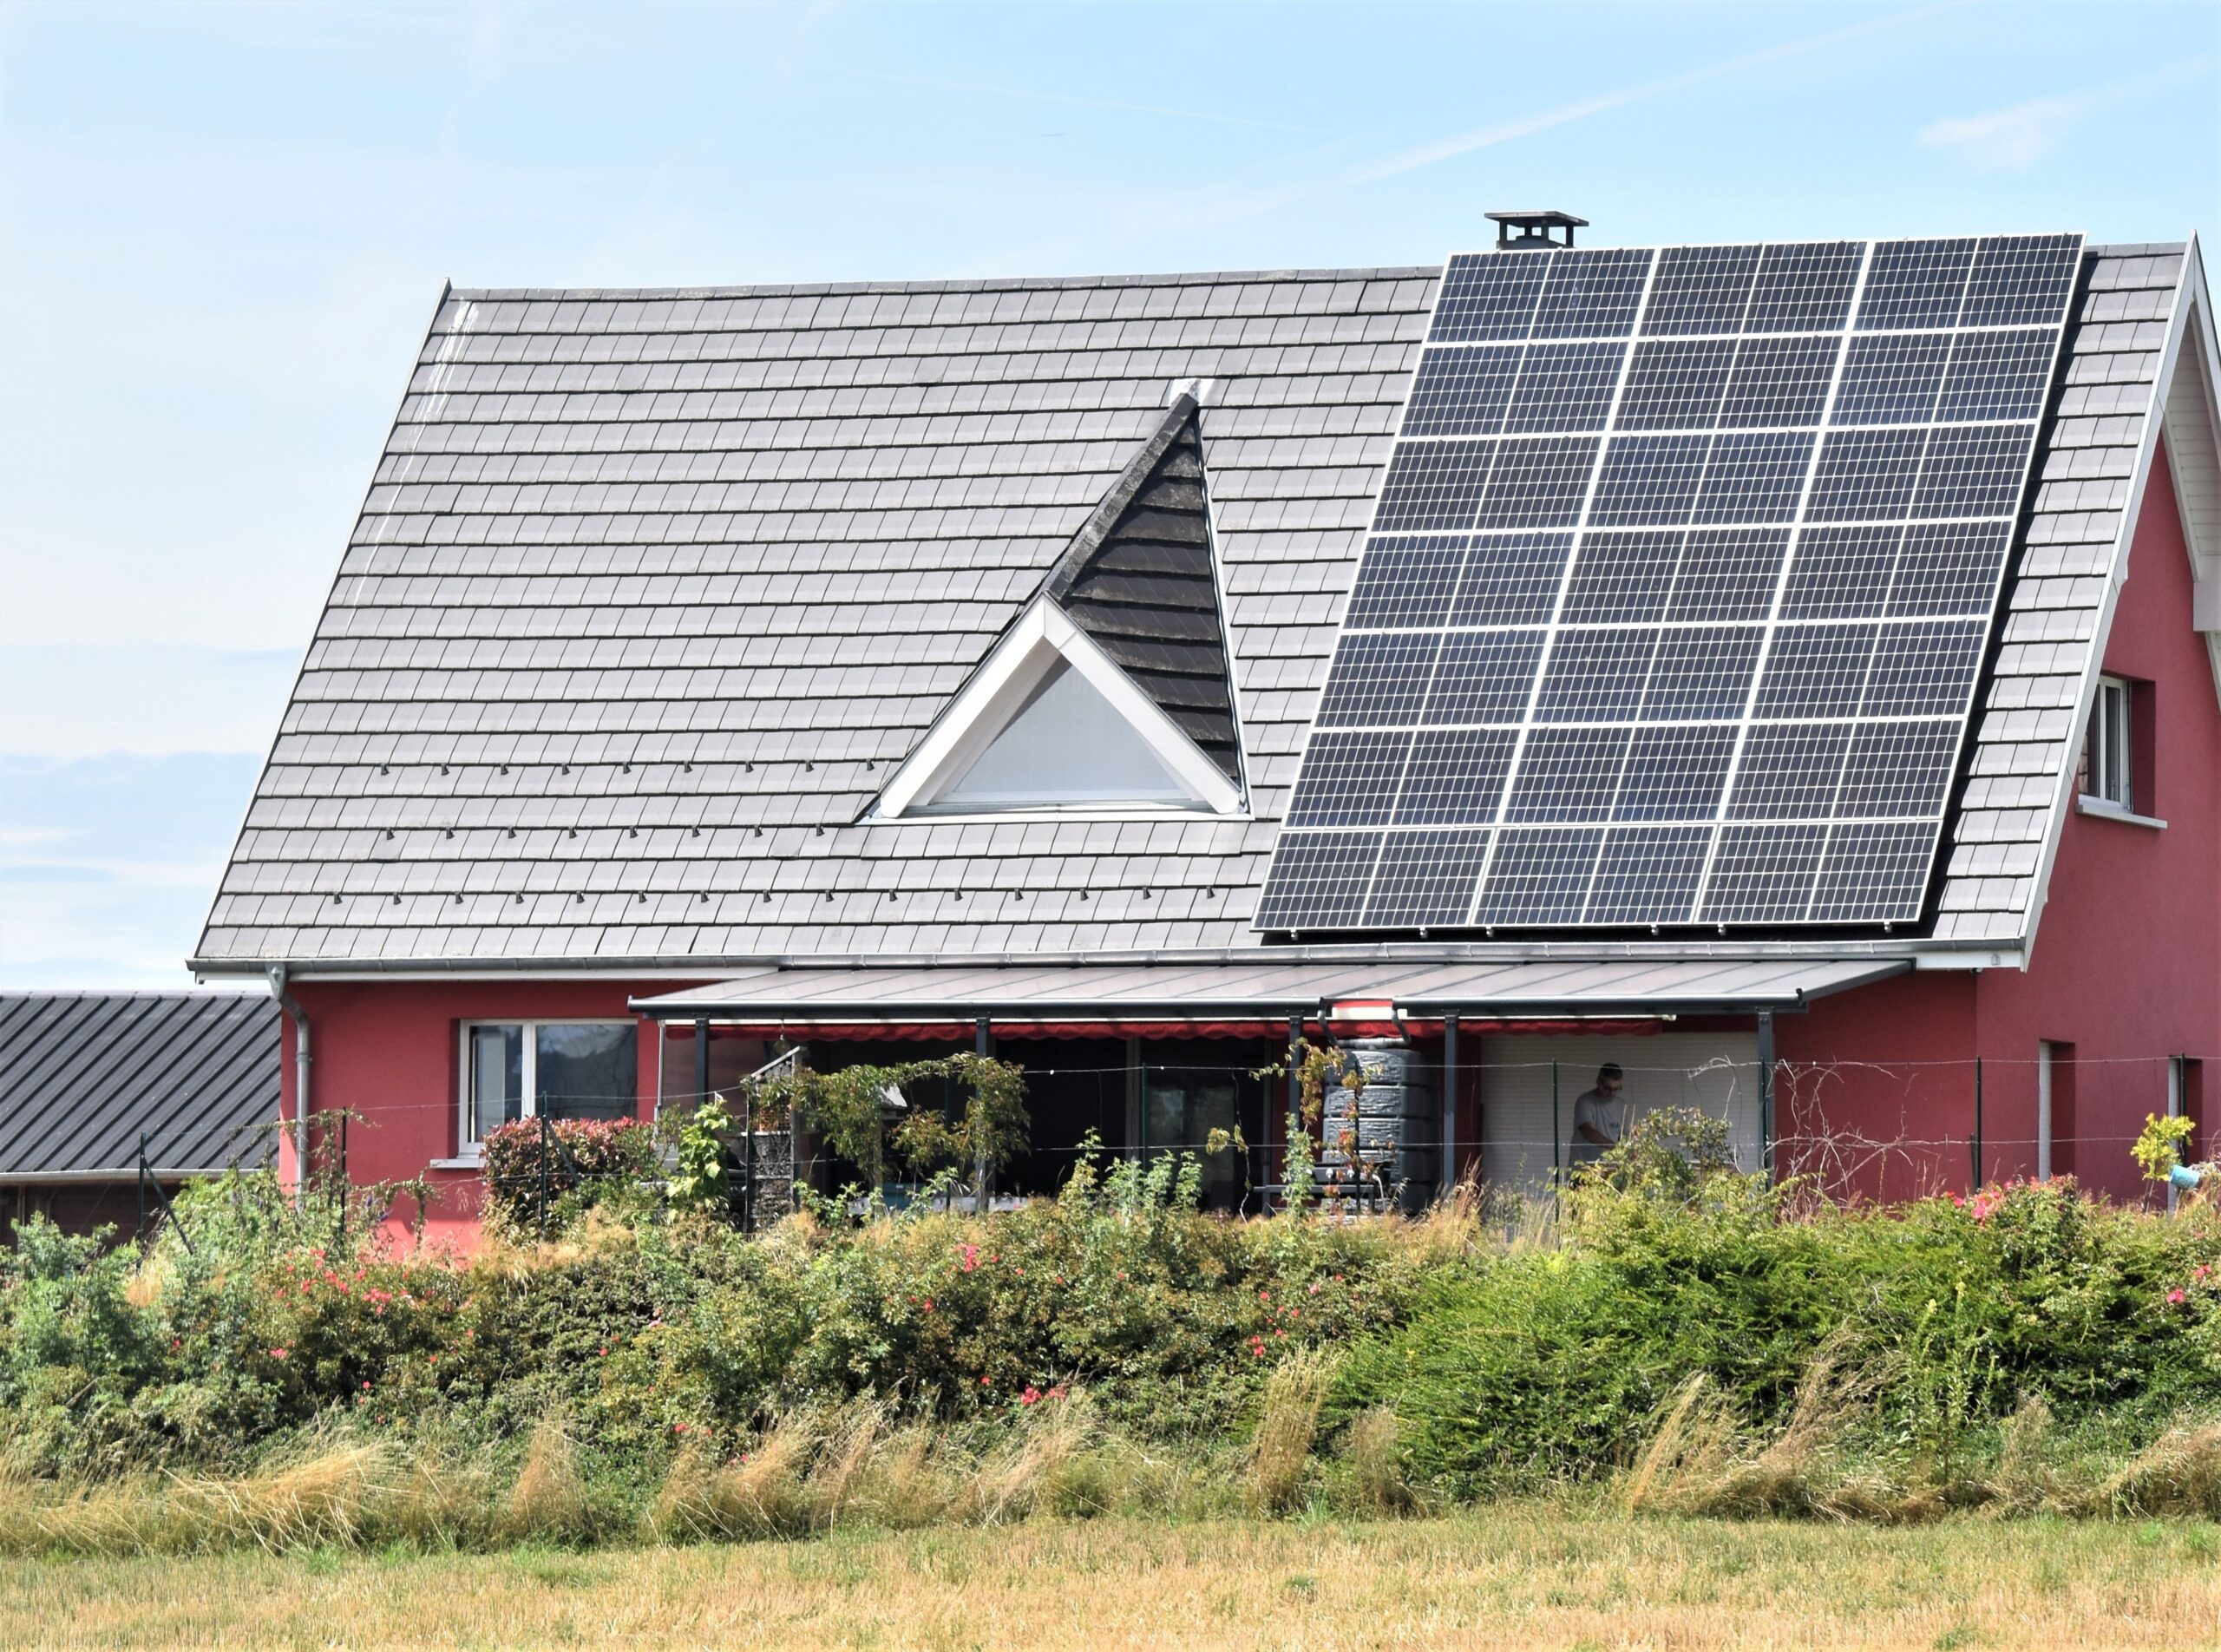 Residential solar example